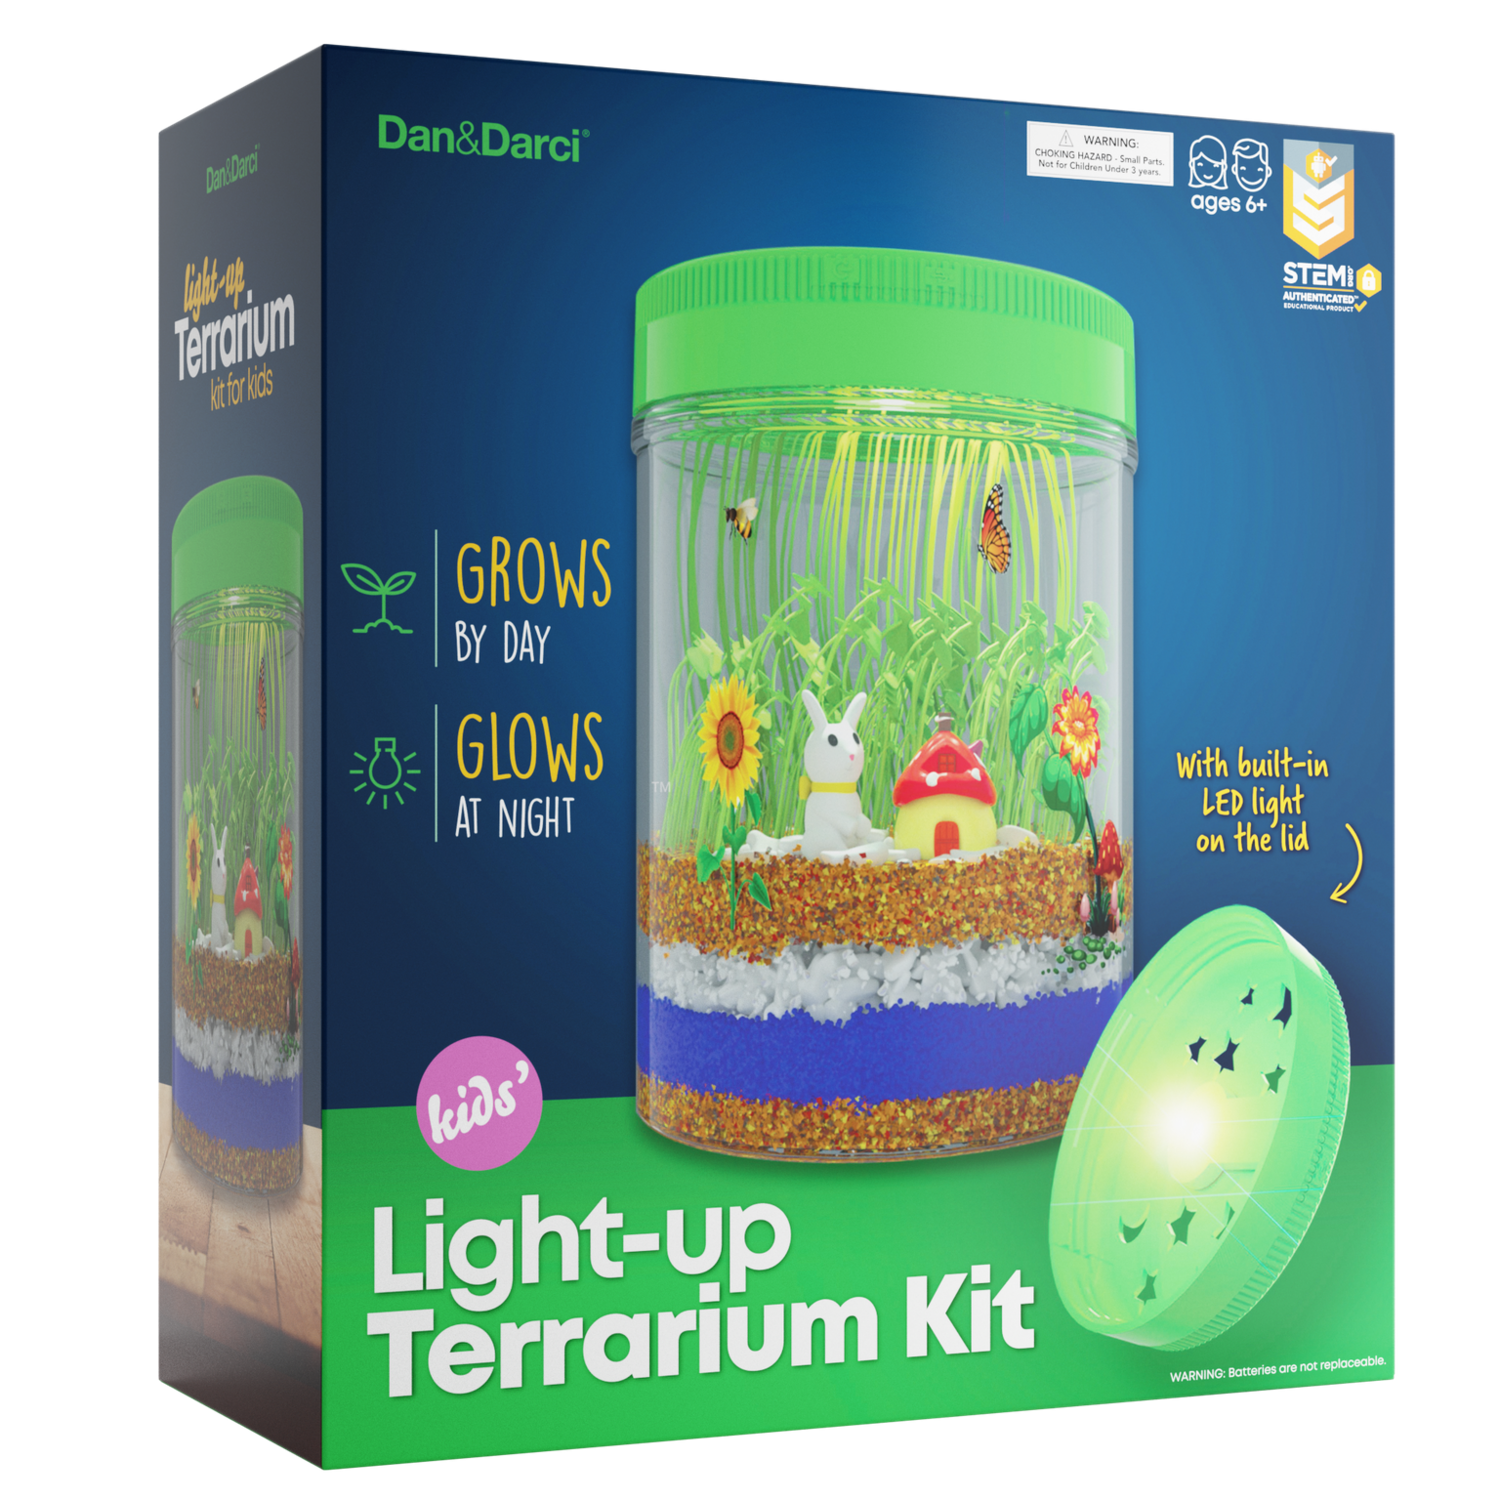 Dan & Darci Light-up Terrarium Kit